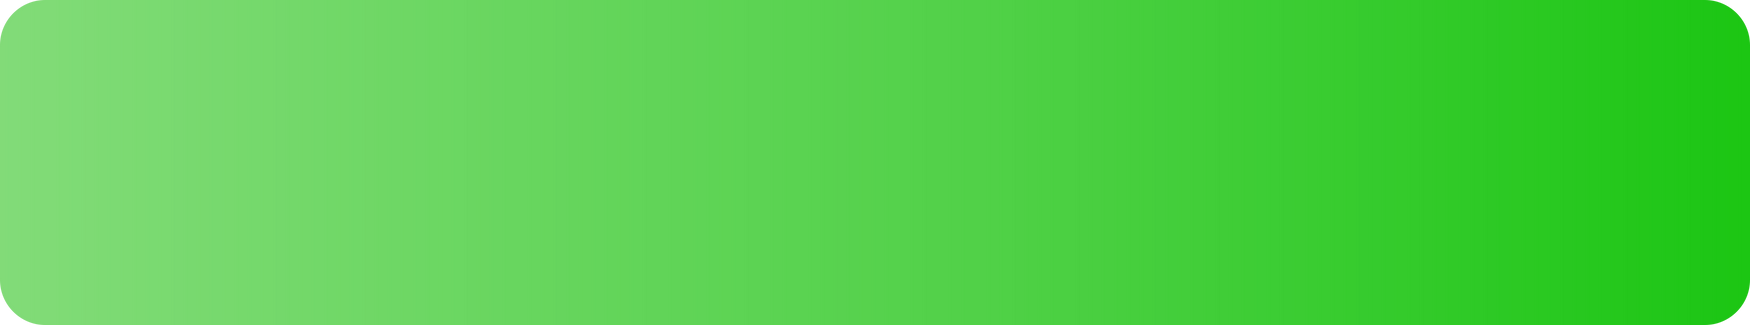 Button gradient modern green